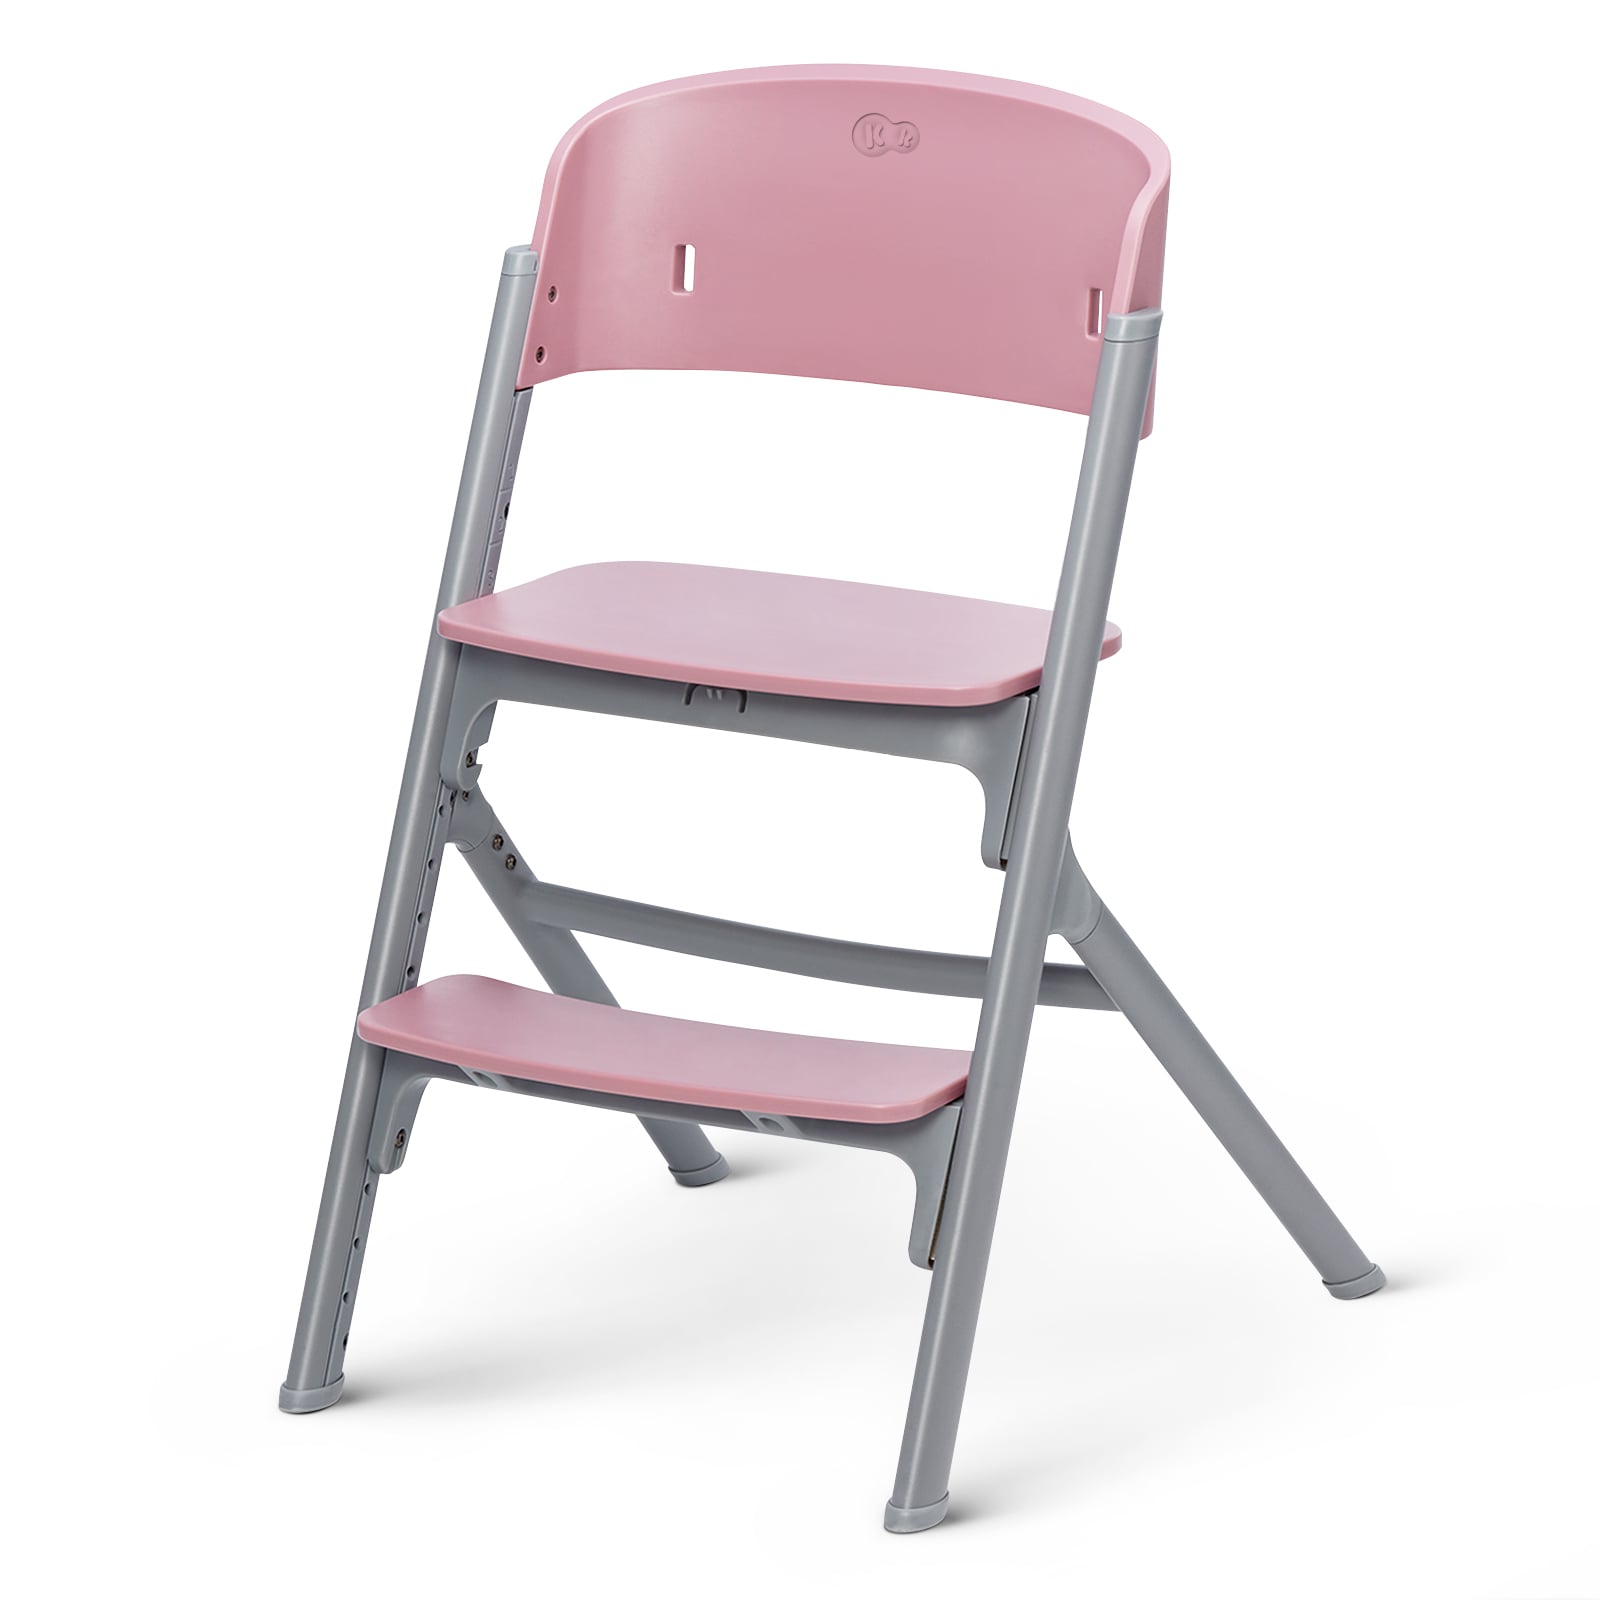 Feeding chair LIVY & CALMEE pink